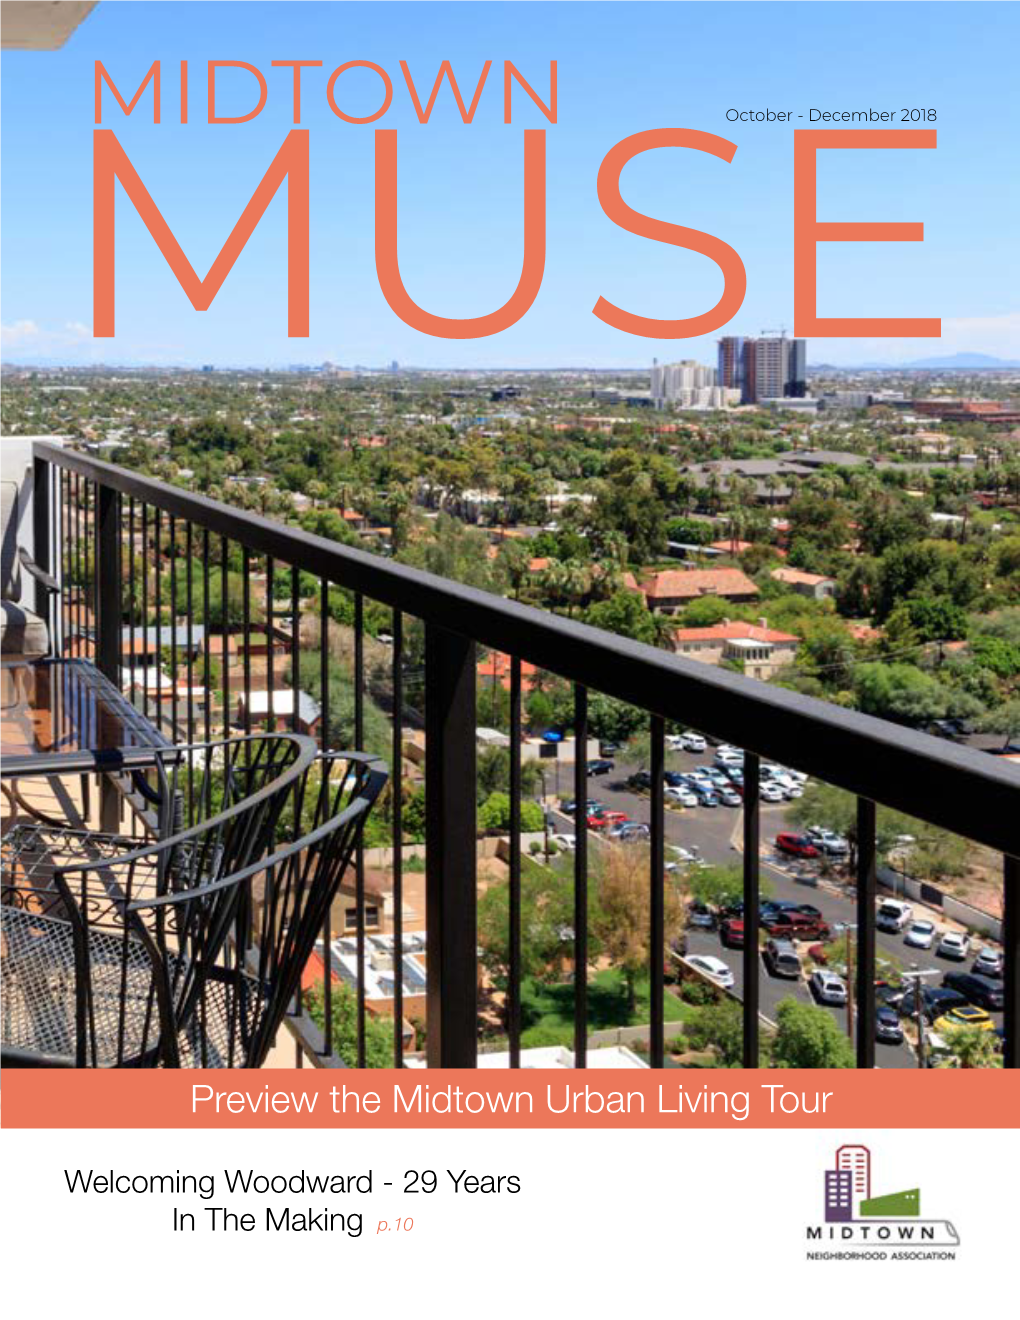 The MUSE Midtown Phoenix